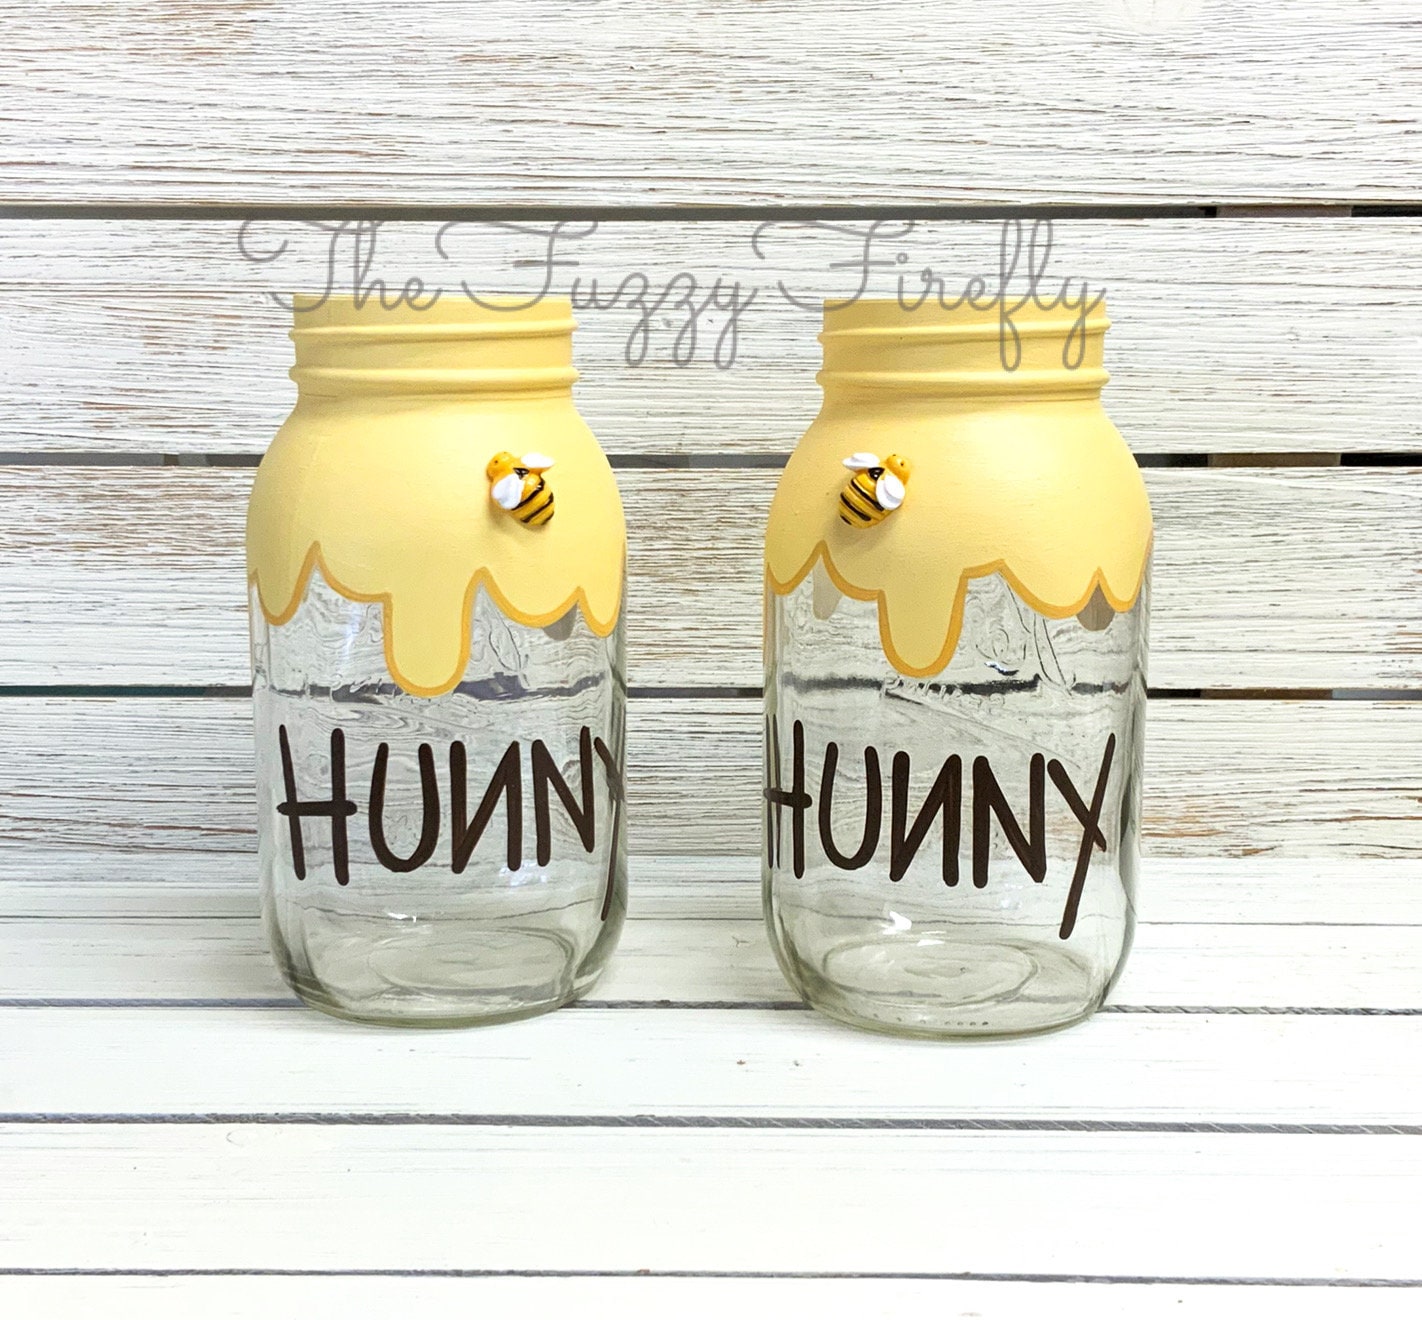 Disney Accents | Winnie The Pooh Hunny Honey Pot Jar | Color: Gray/Yellow | Size: Os | Burgers_Closet's Closet